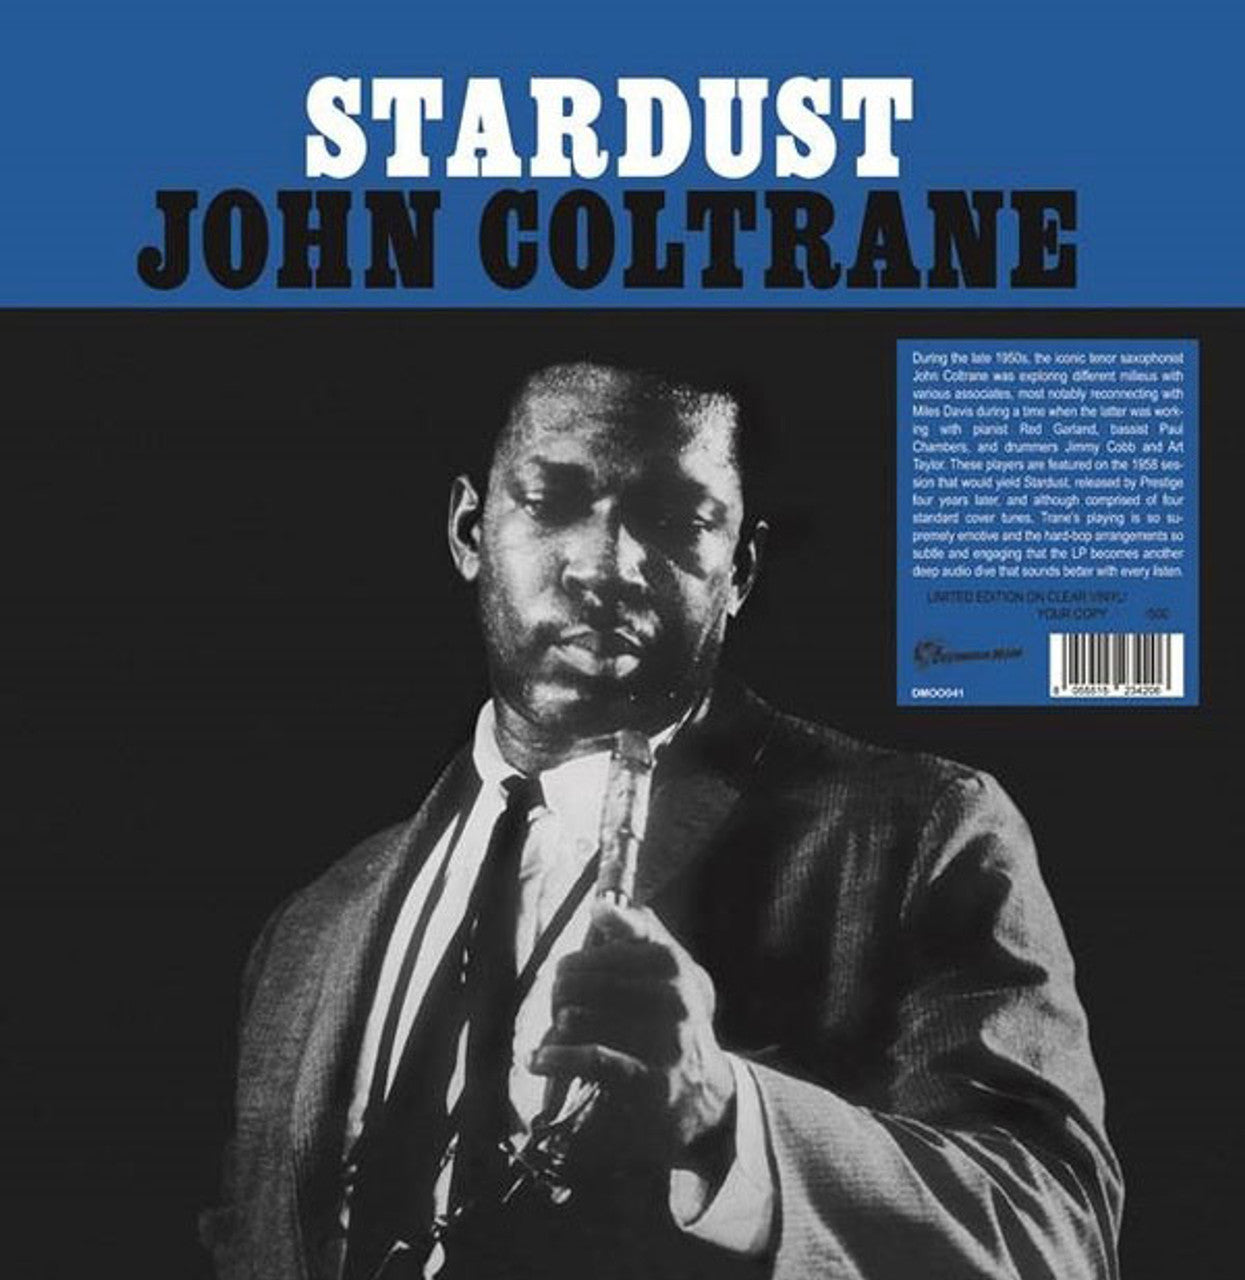 Coltrane, John "Stardust" LP